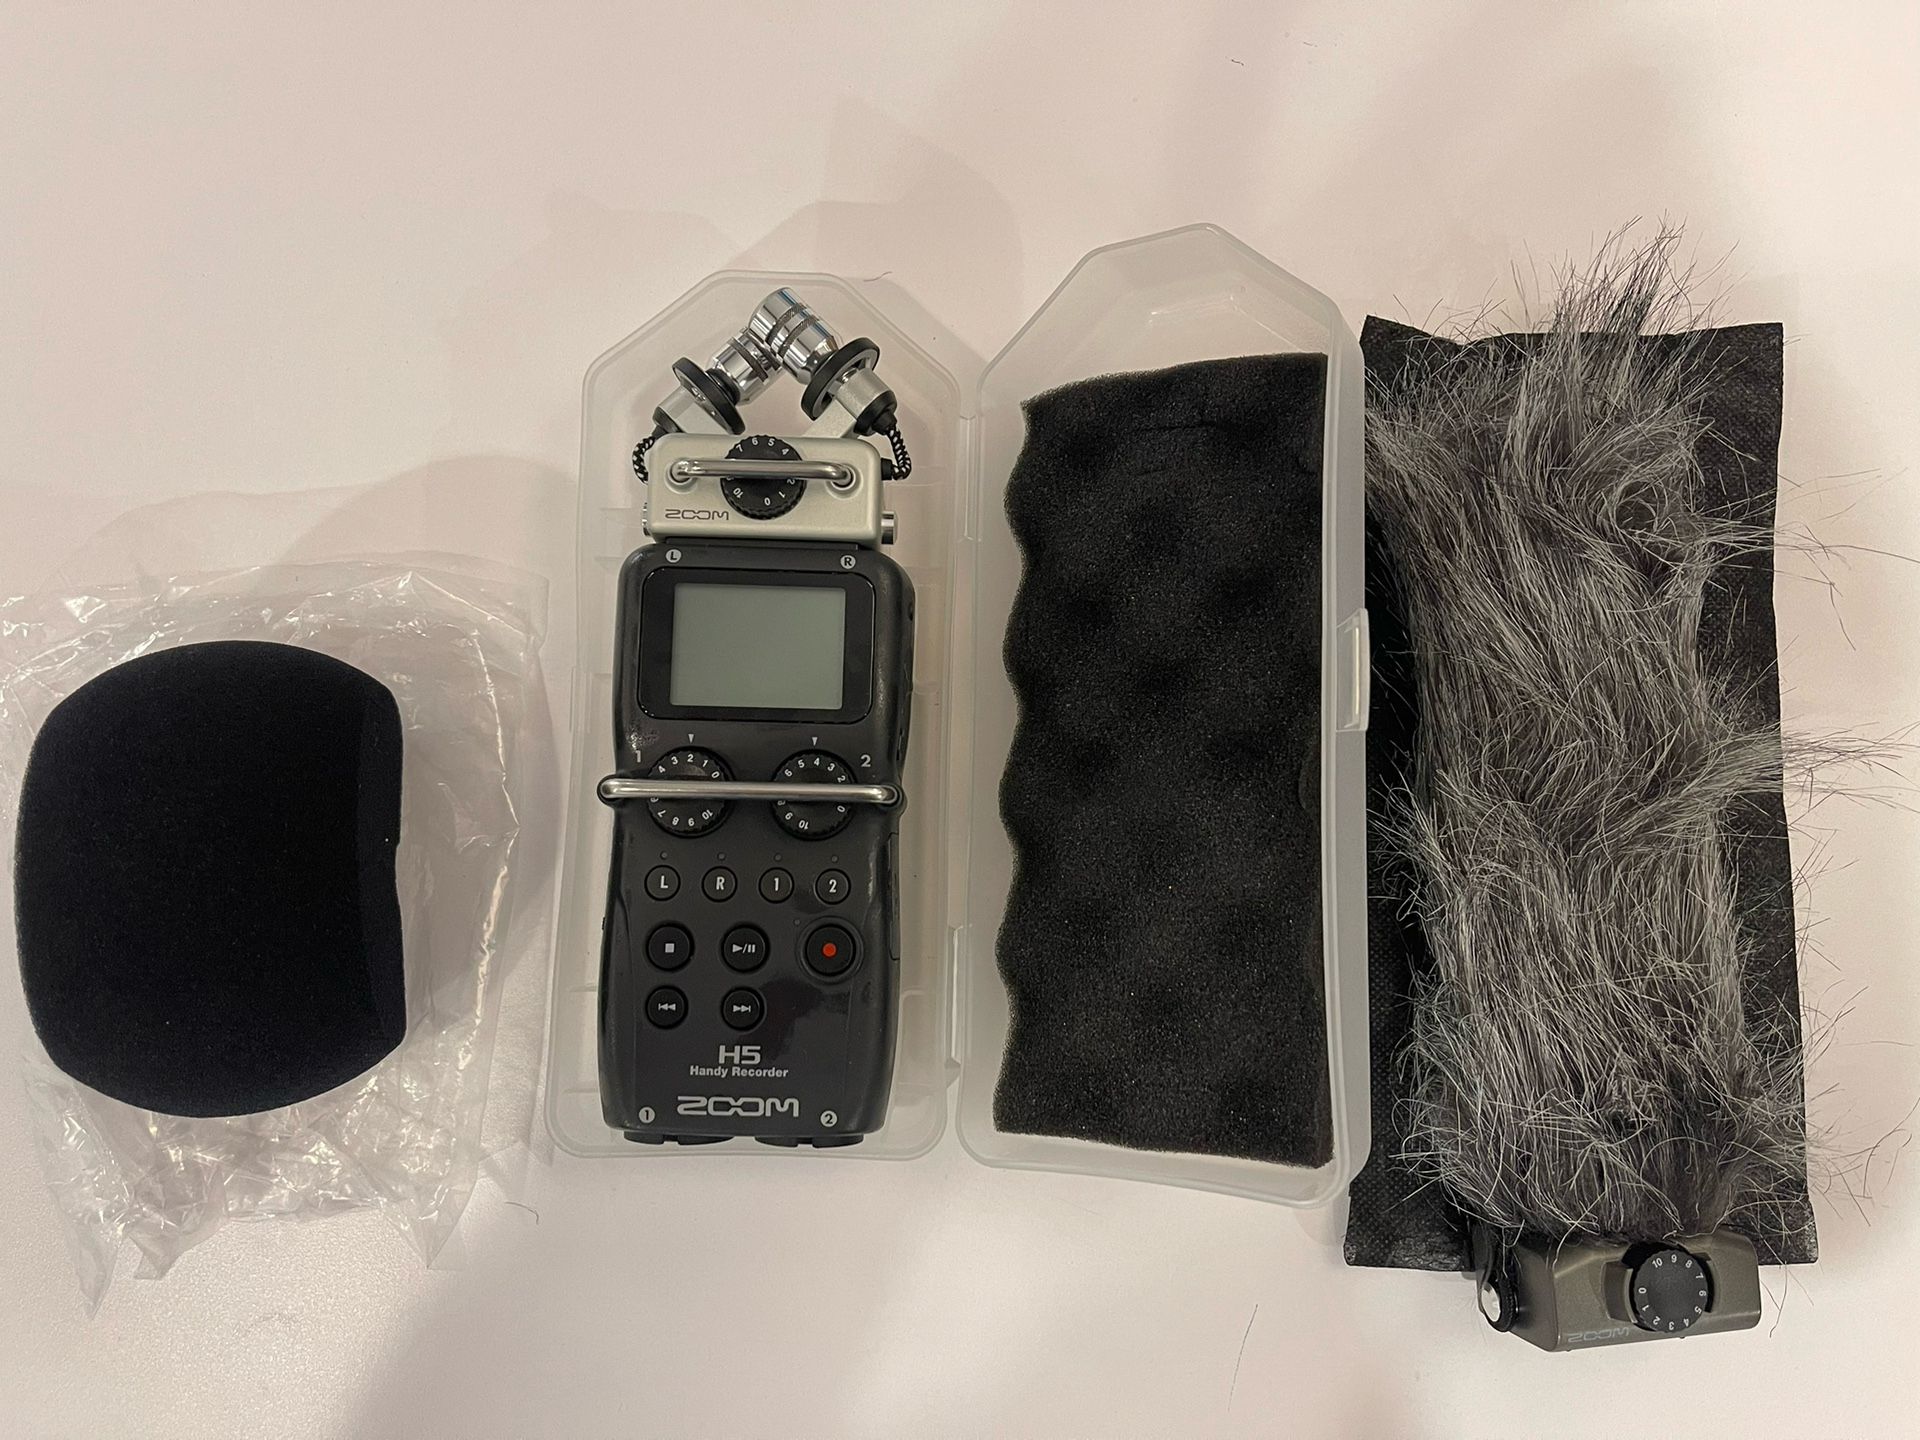 Zoom H5 4-Track Portable Recorder